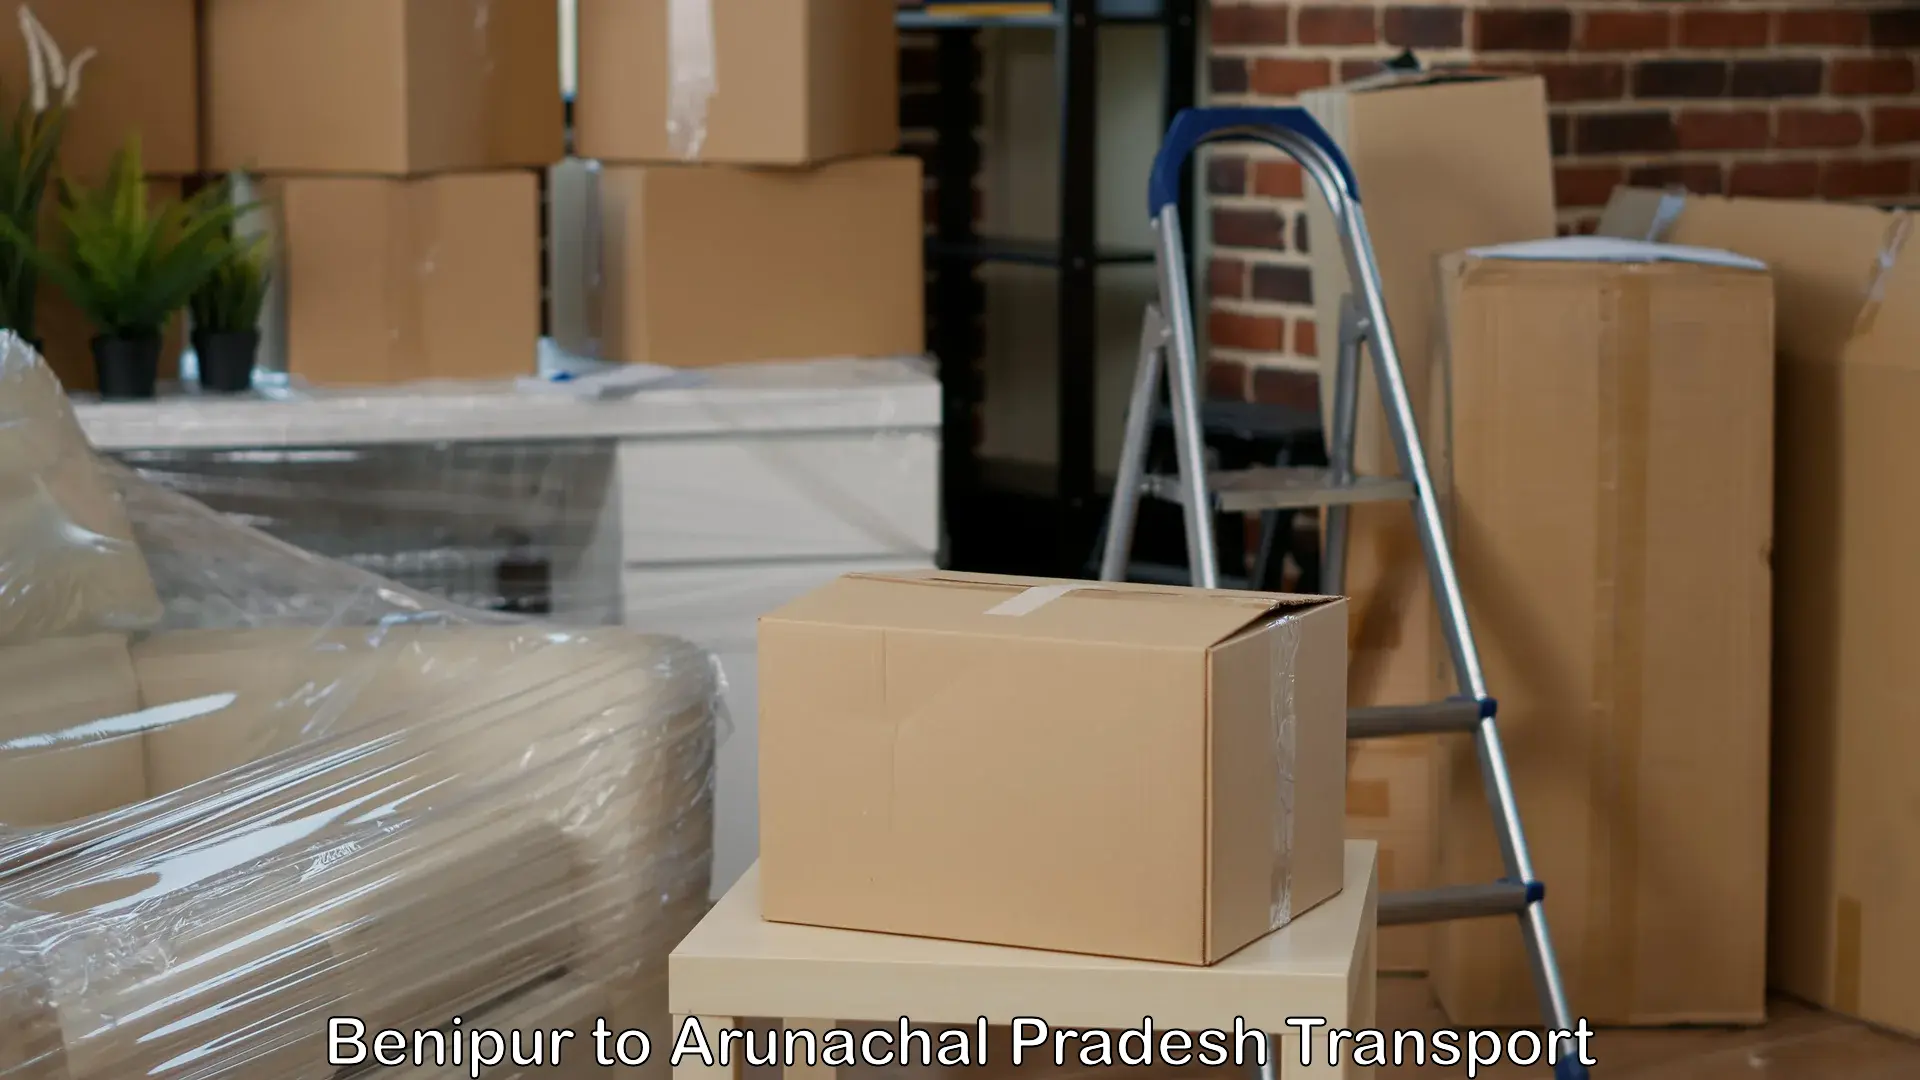 Daily parcel service transport in Benipur to Jairampur